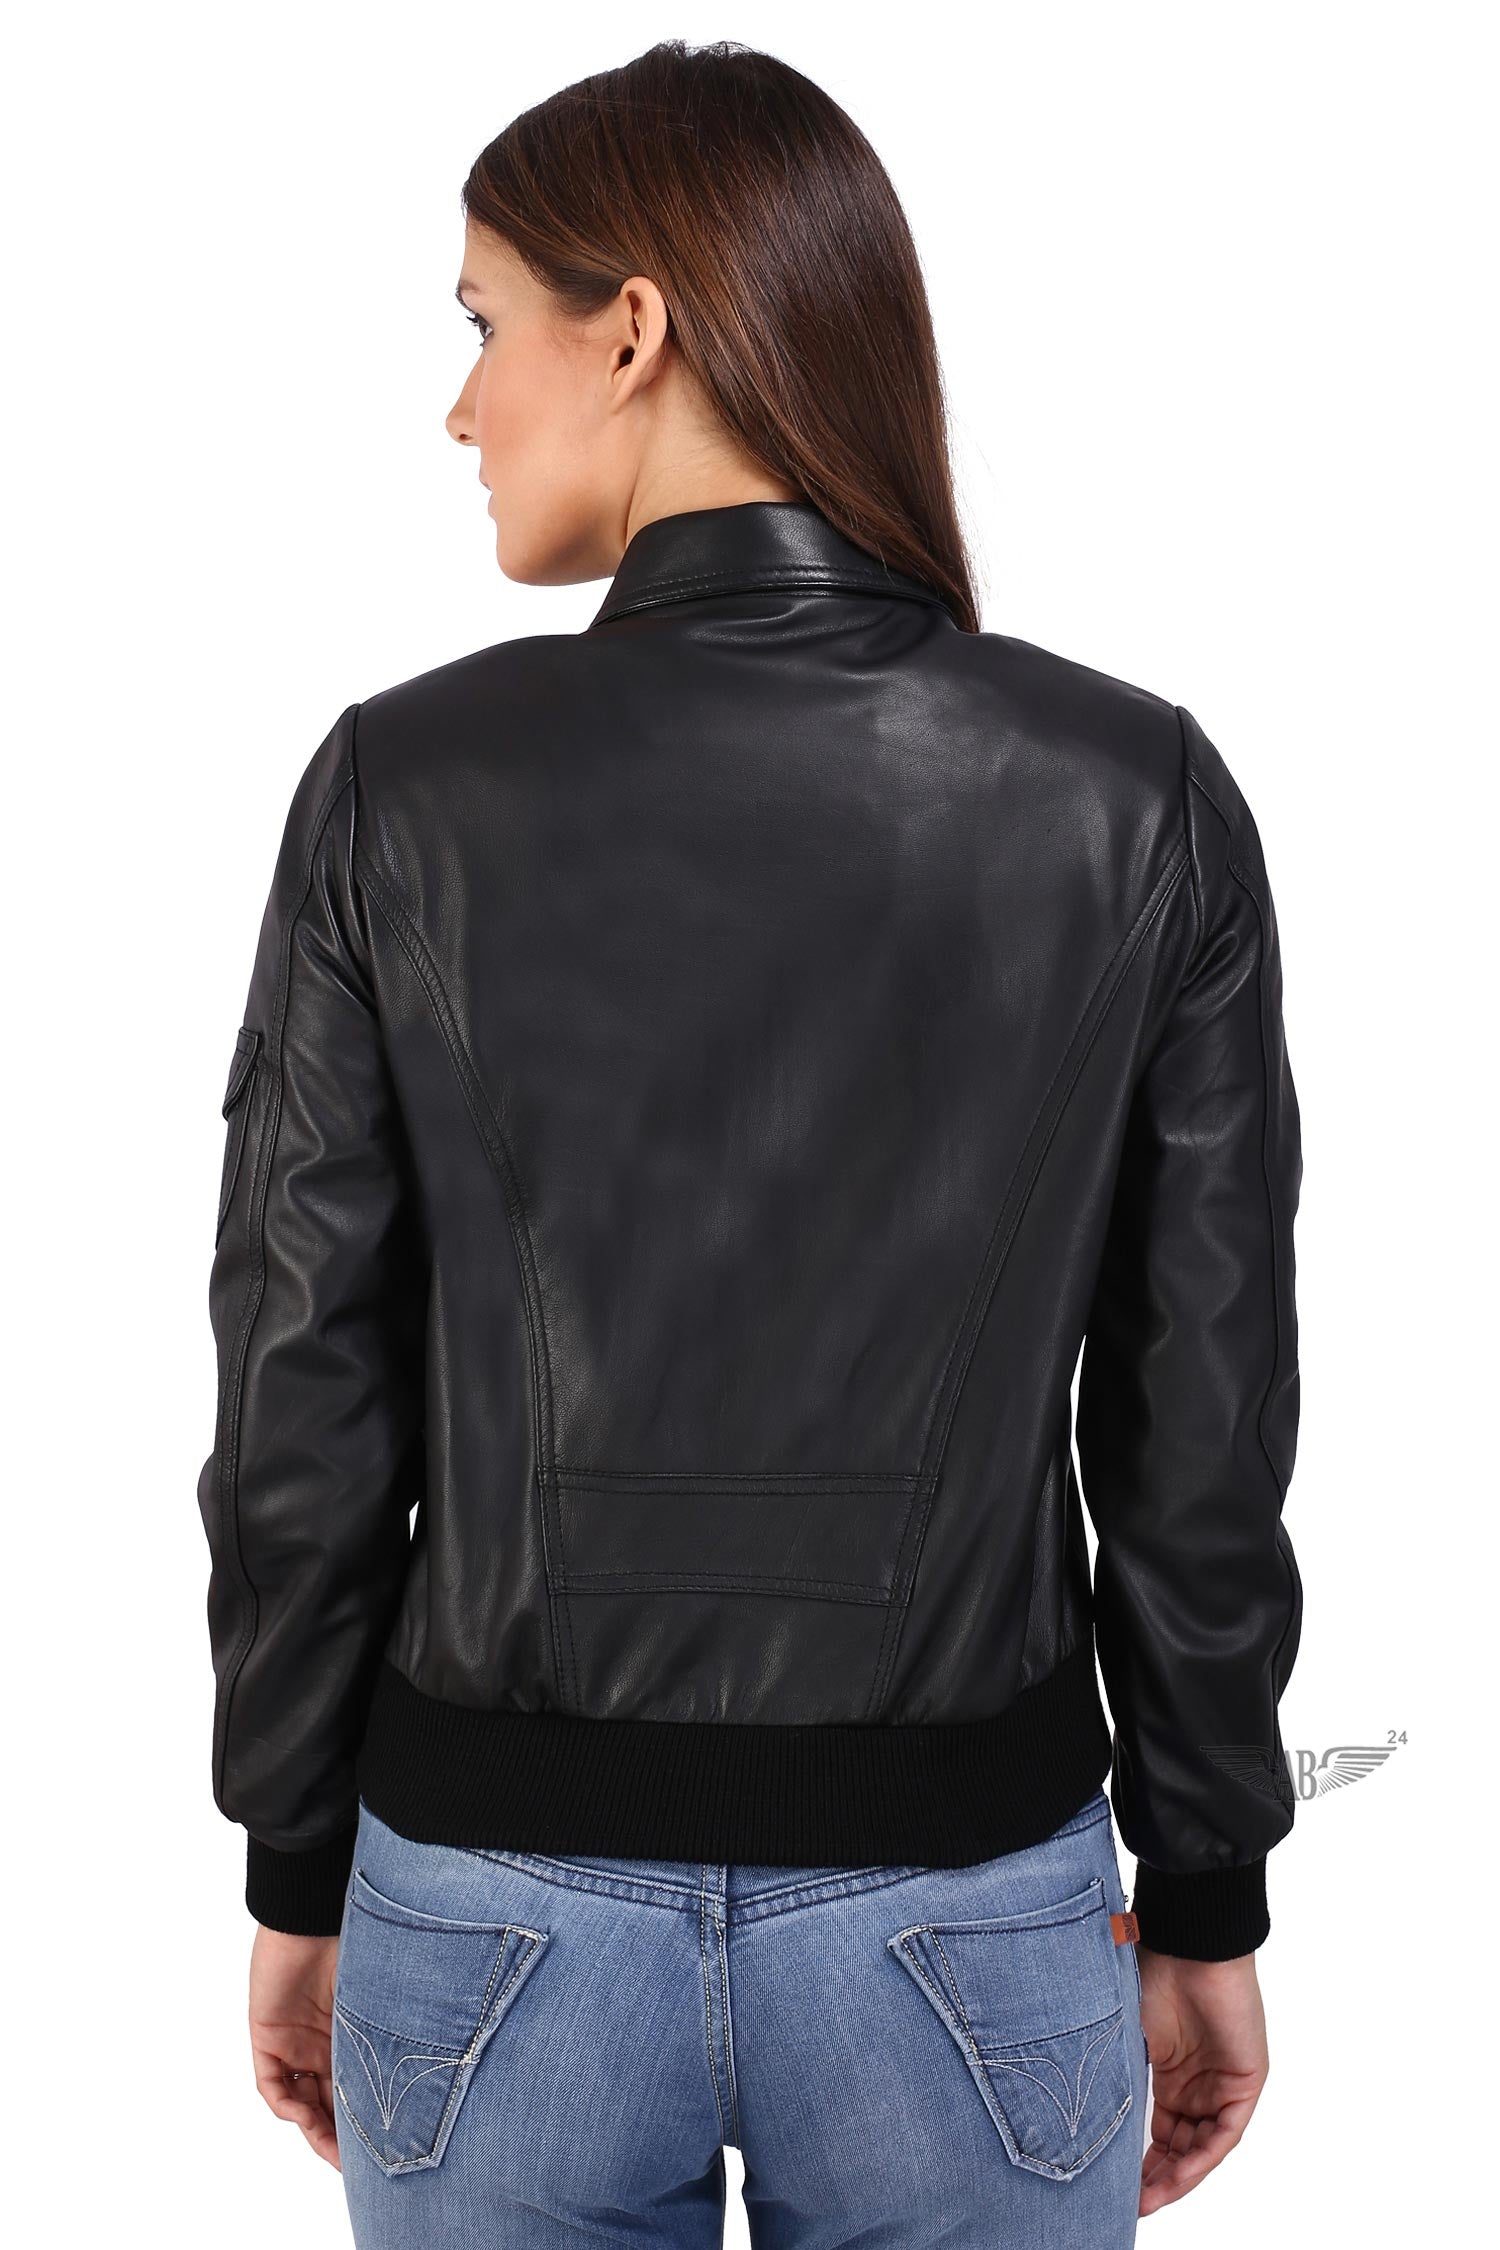 back view of Womens bomber jacket (black leather jacket)